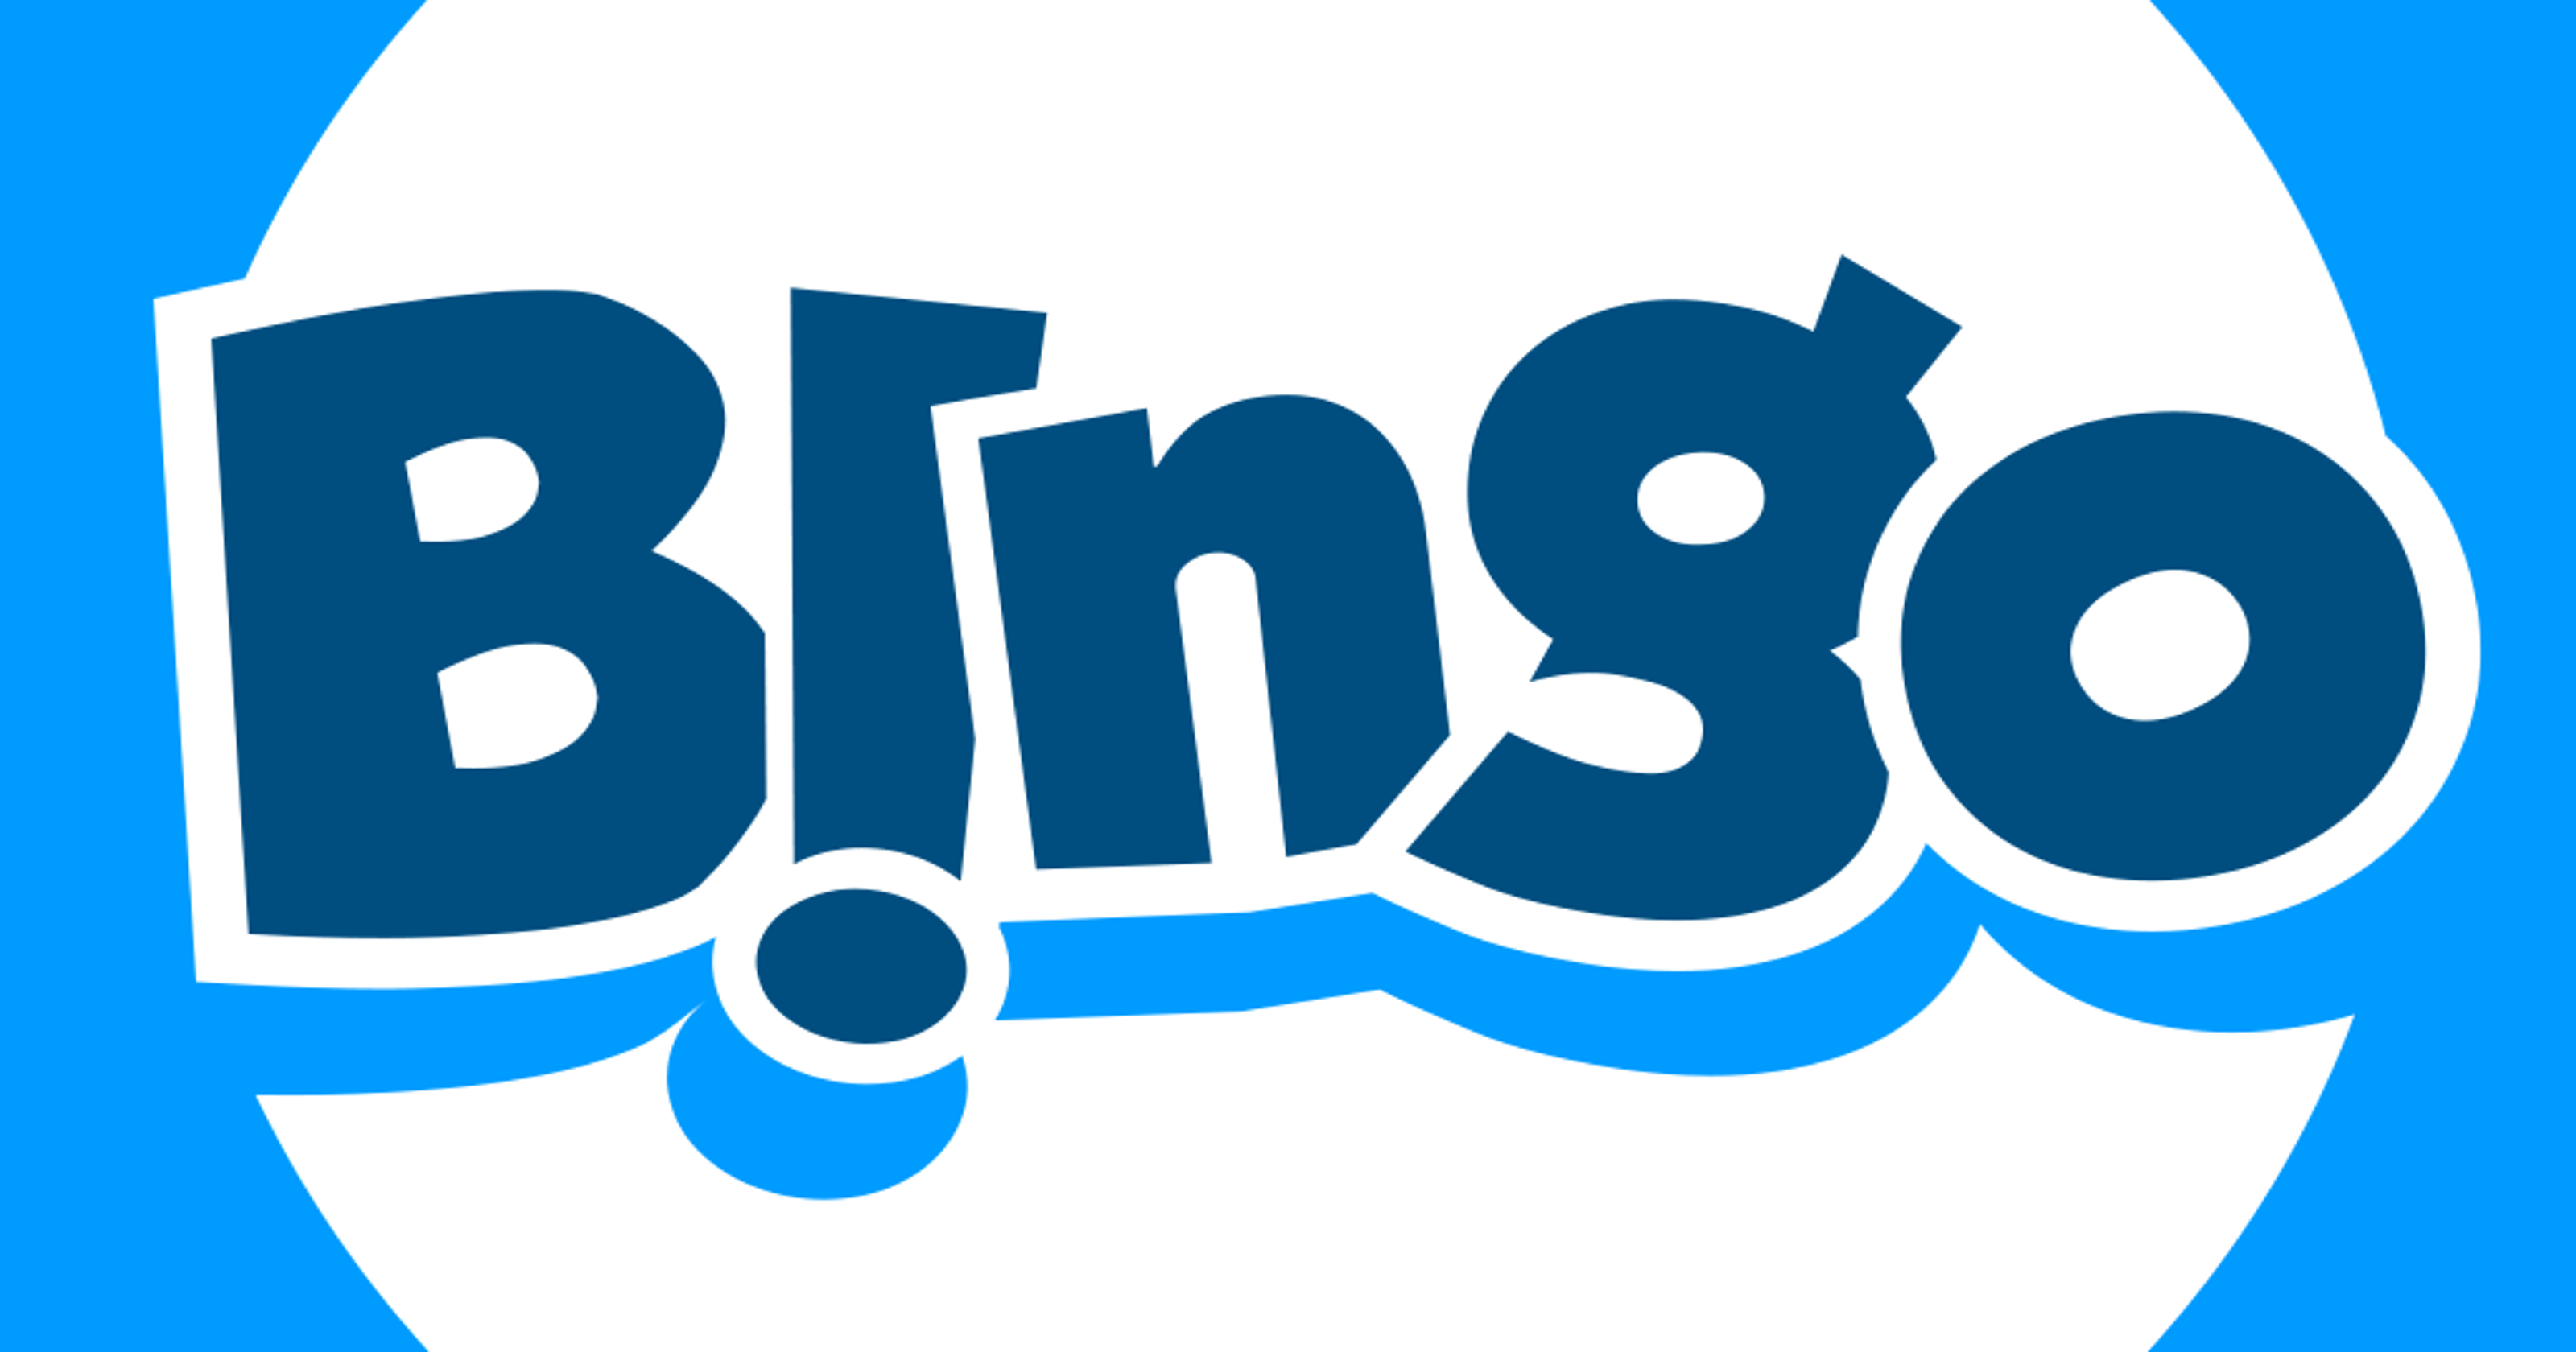 Play free Bingo with USA TODAY!